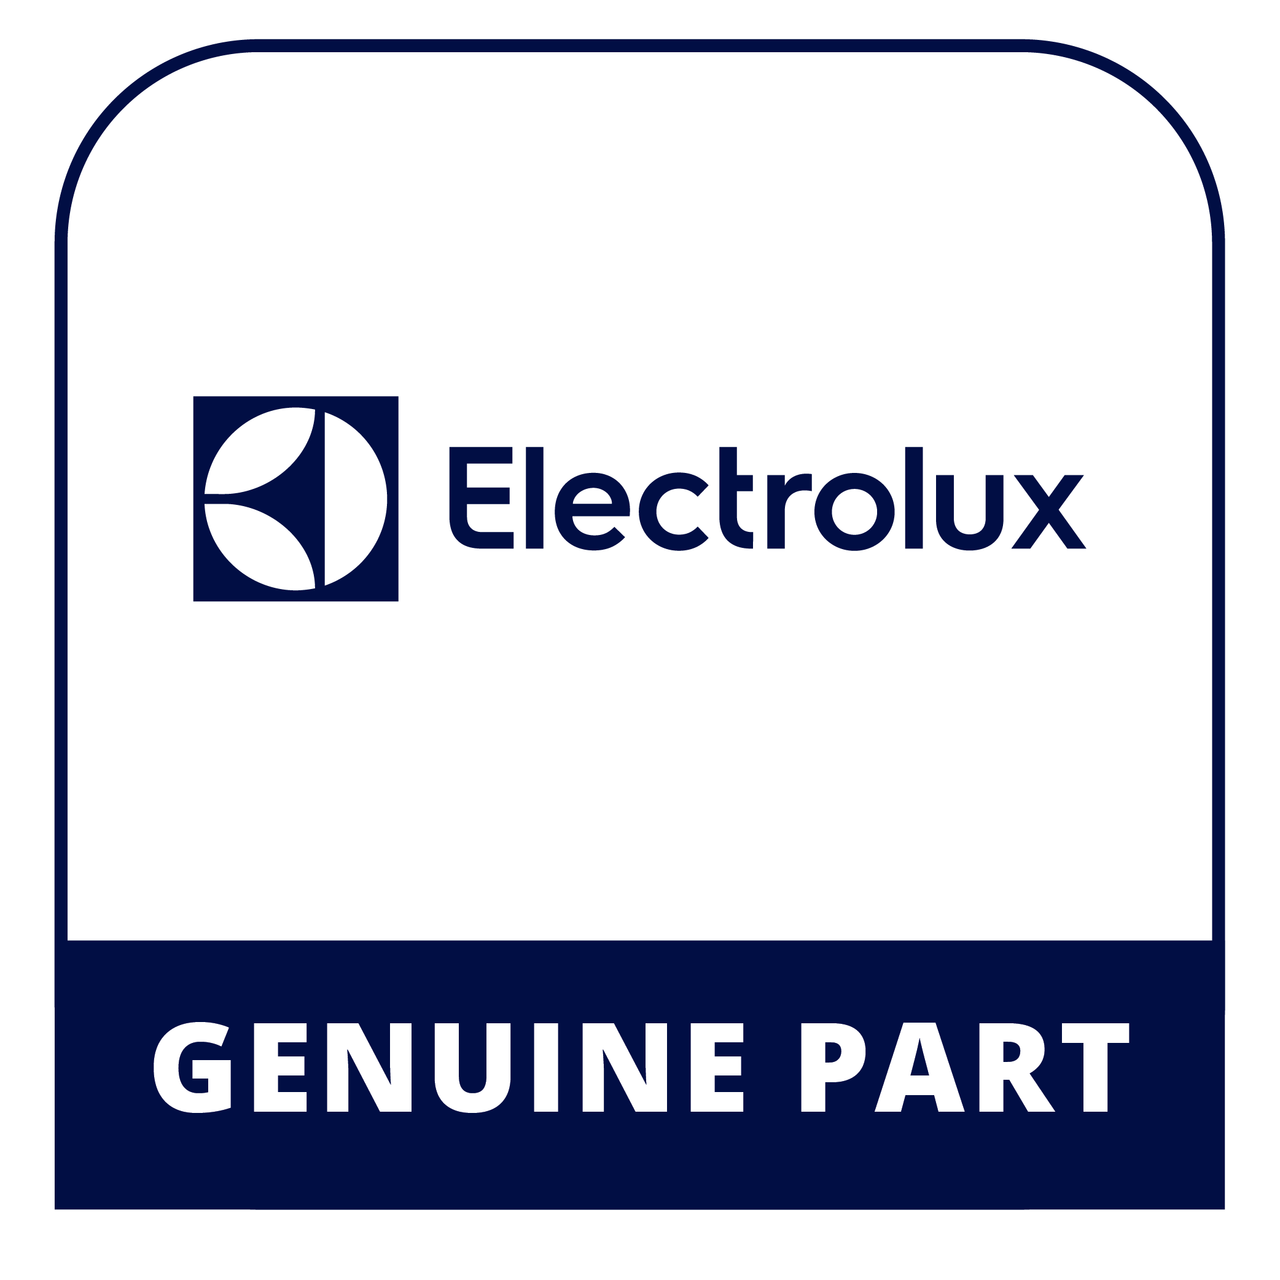 Frigidaire - Electrolux 3206166 - Support-Door Rack - Genuine Electrolux Part